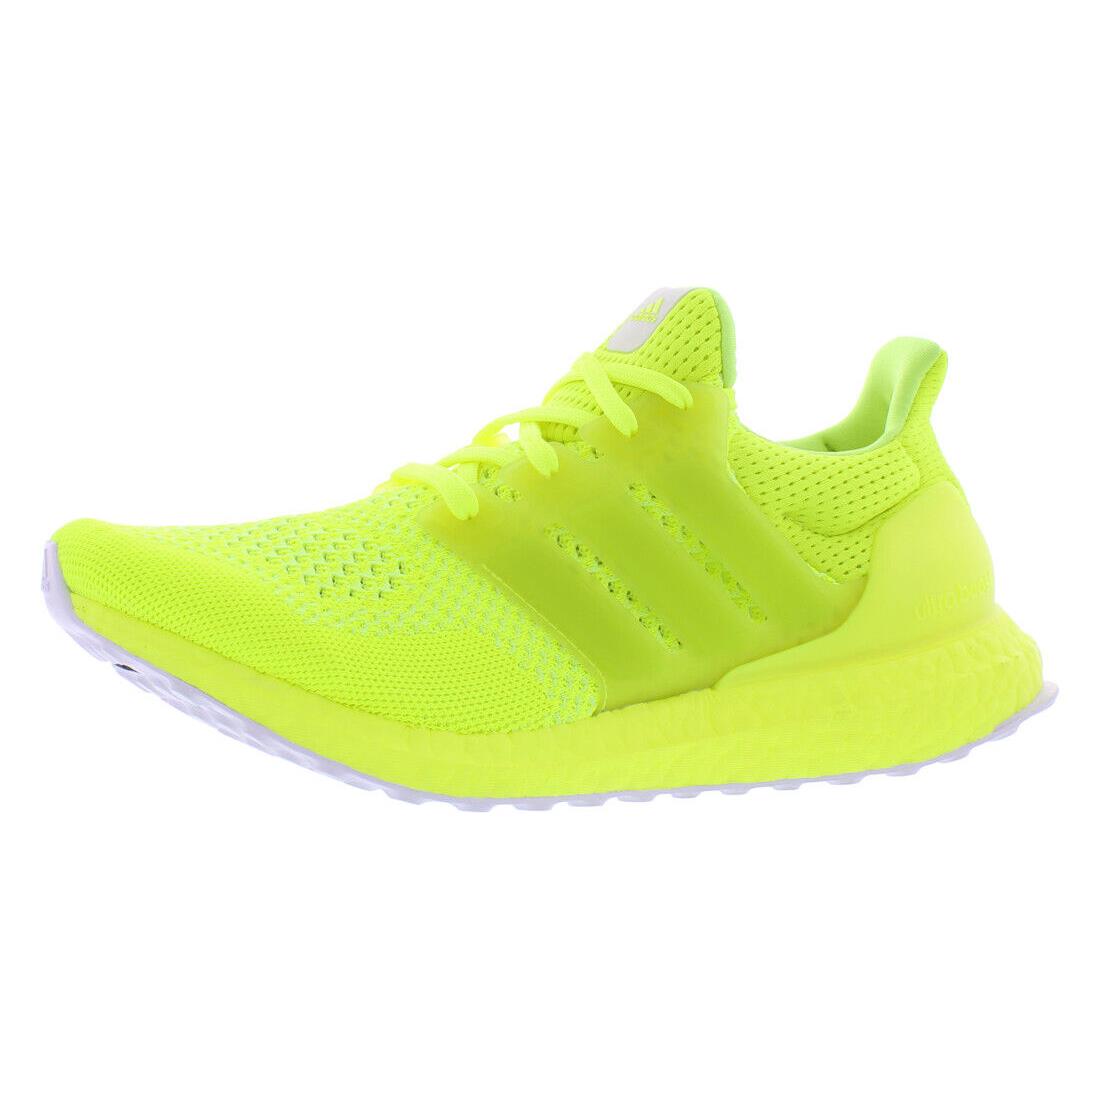 Adidas Ultraboost 1.0 Dna Mens Shoes - Neon, Main: Green